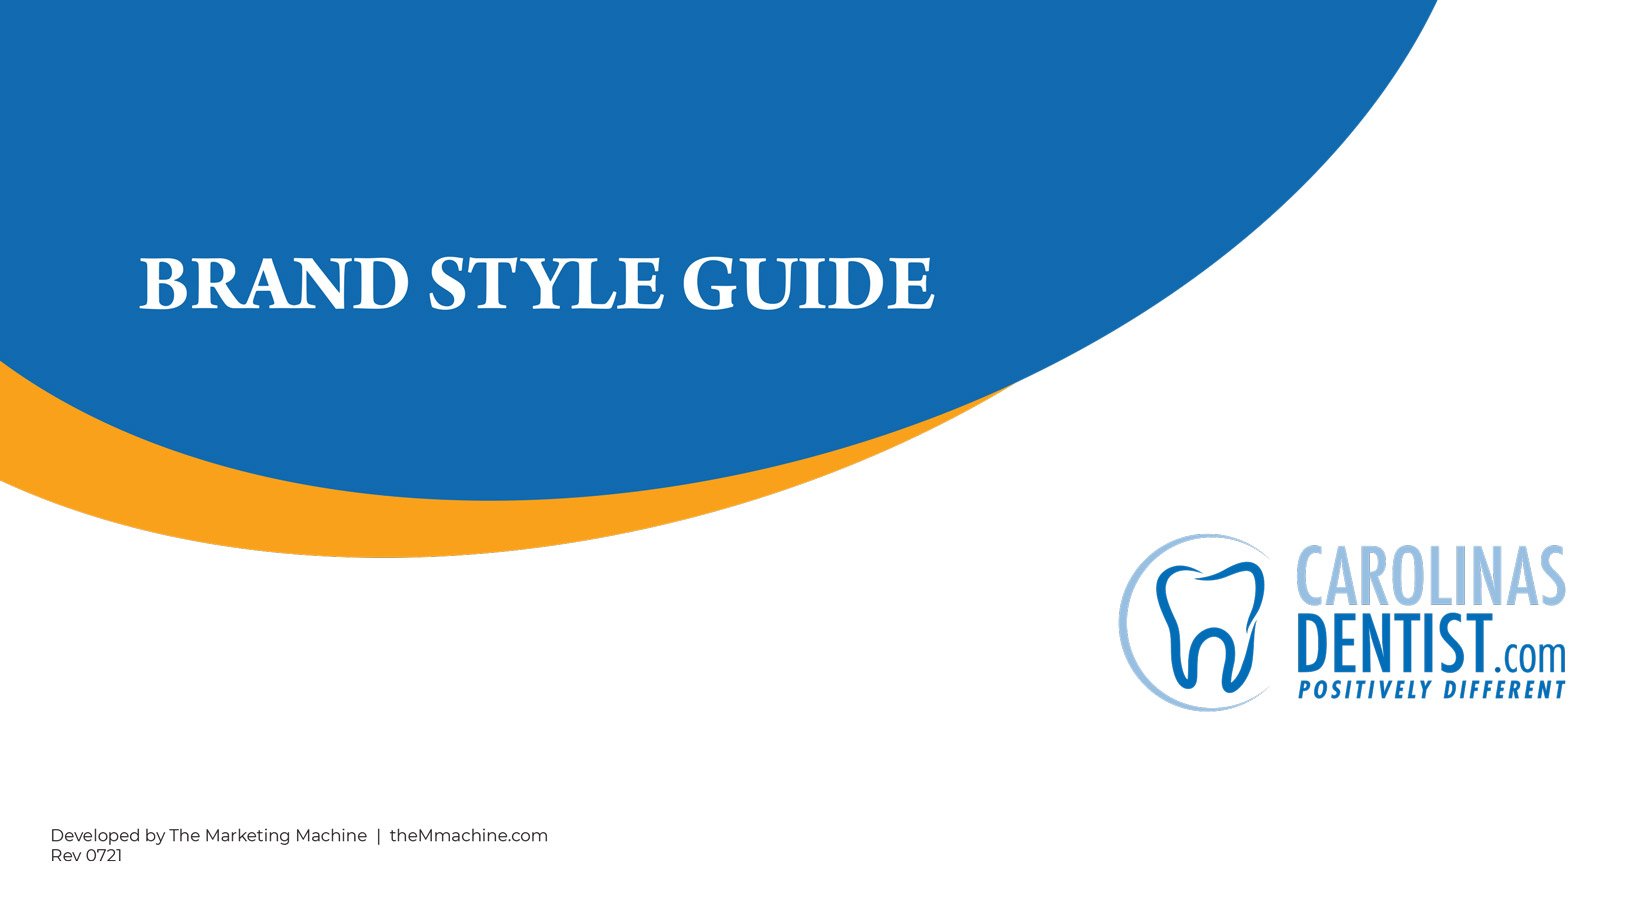 Carolinas Dentist Brand Style Guide